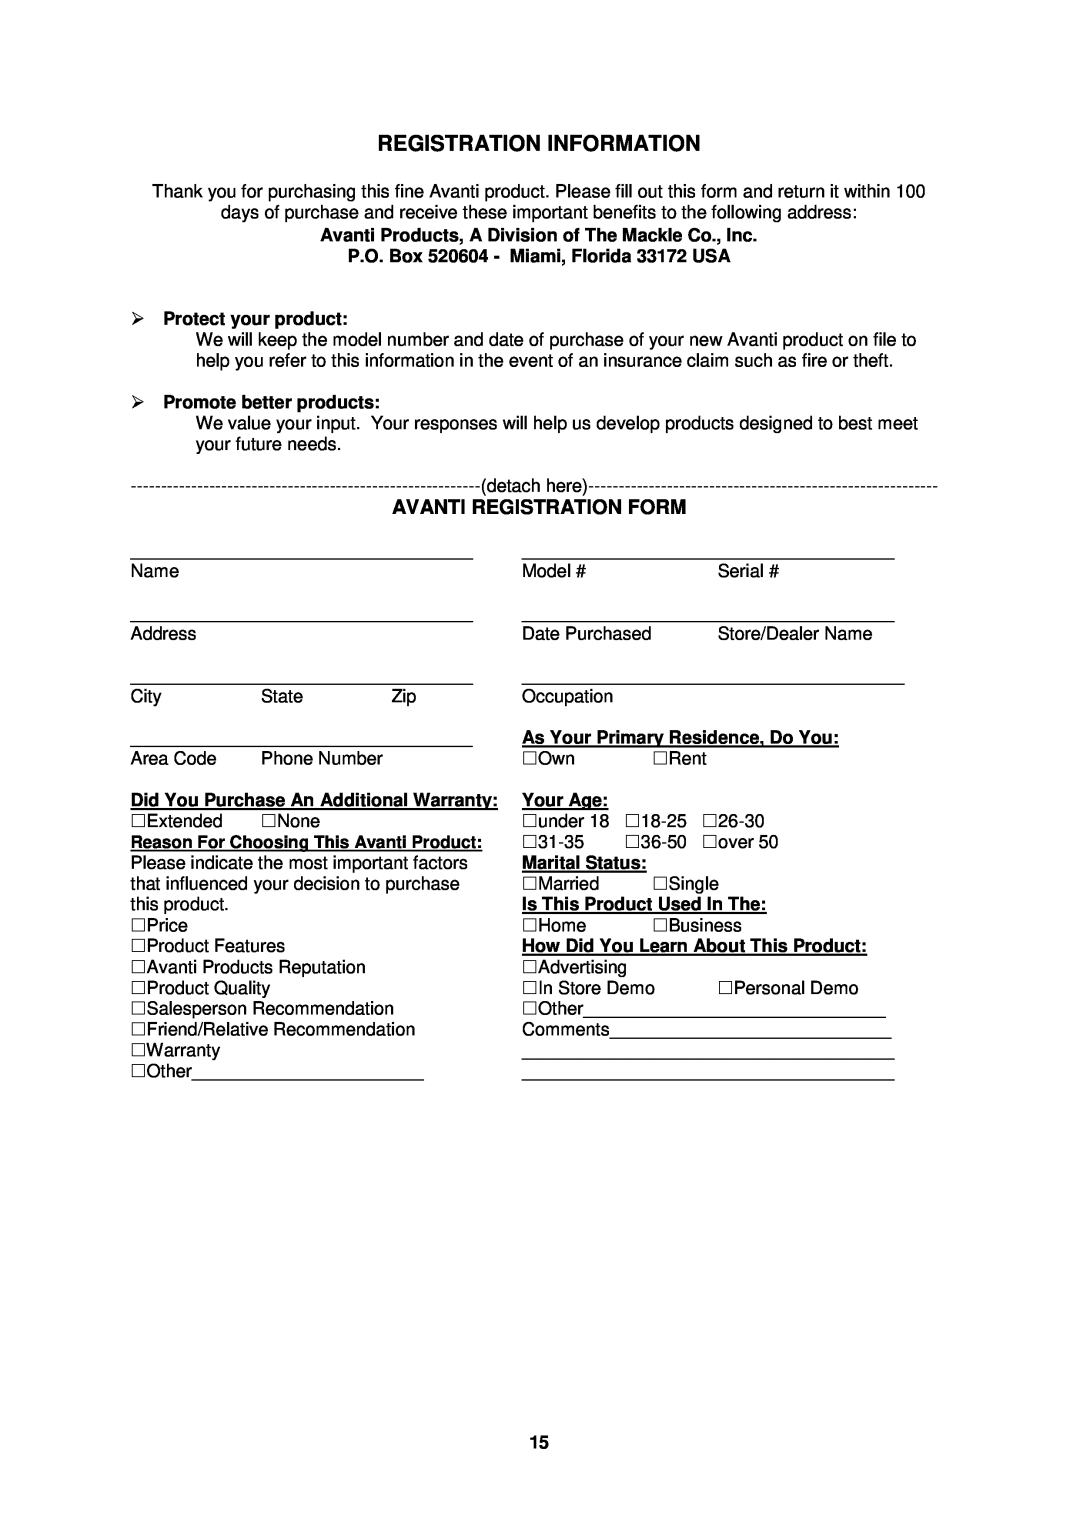 Avanti WC34TM Registration Information, Avanti Registration Form, P.O. Box 520604 - Miami, Florida 33172 USA, Your Age 